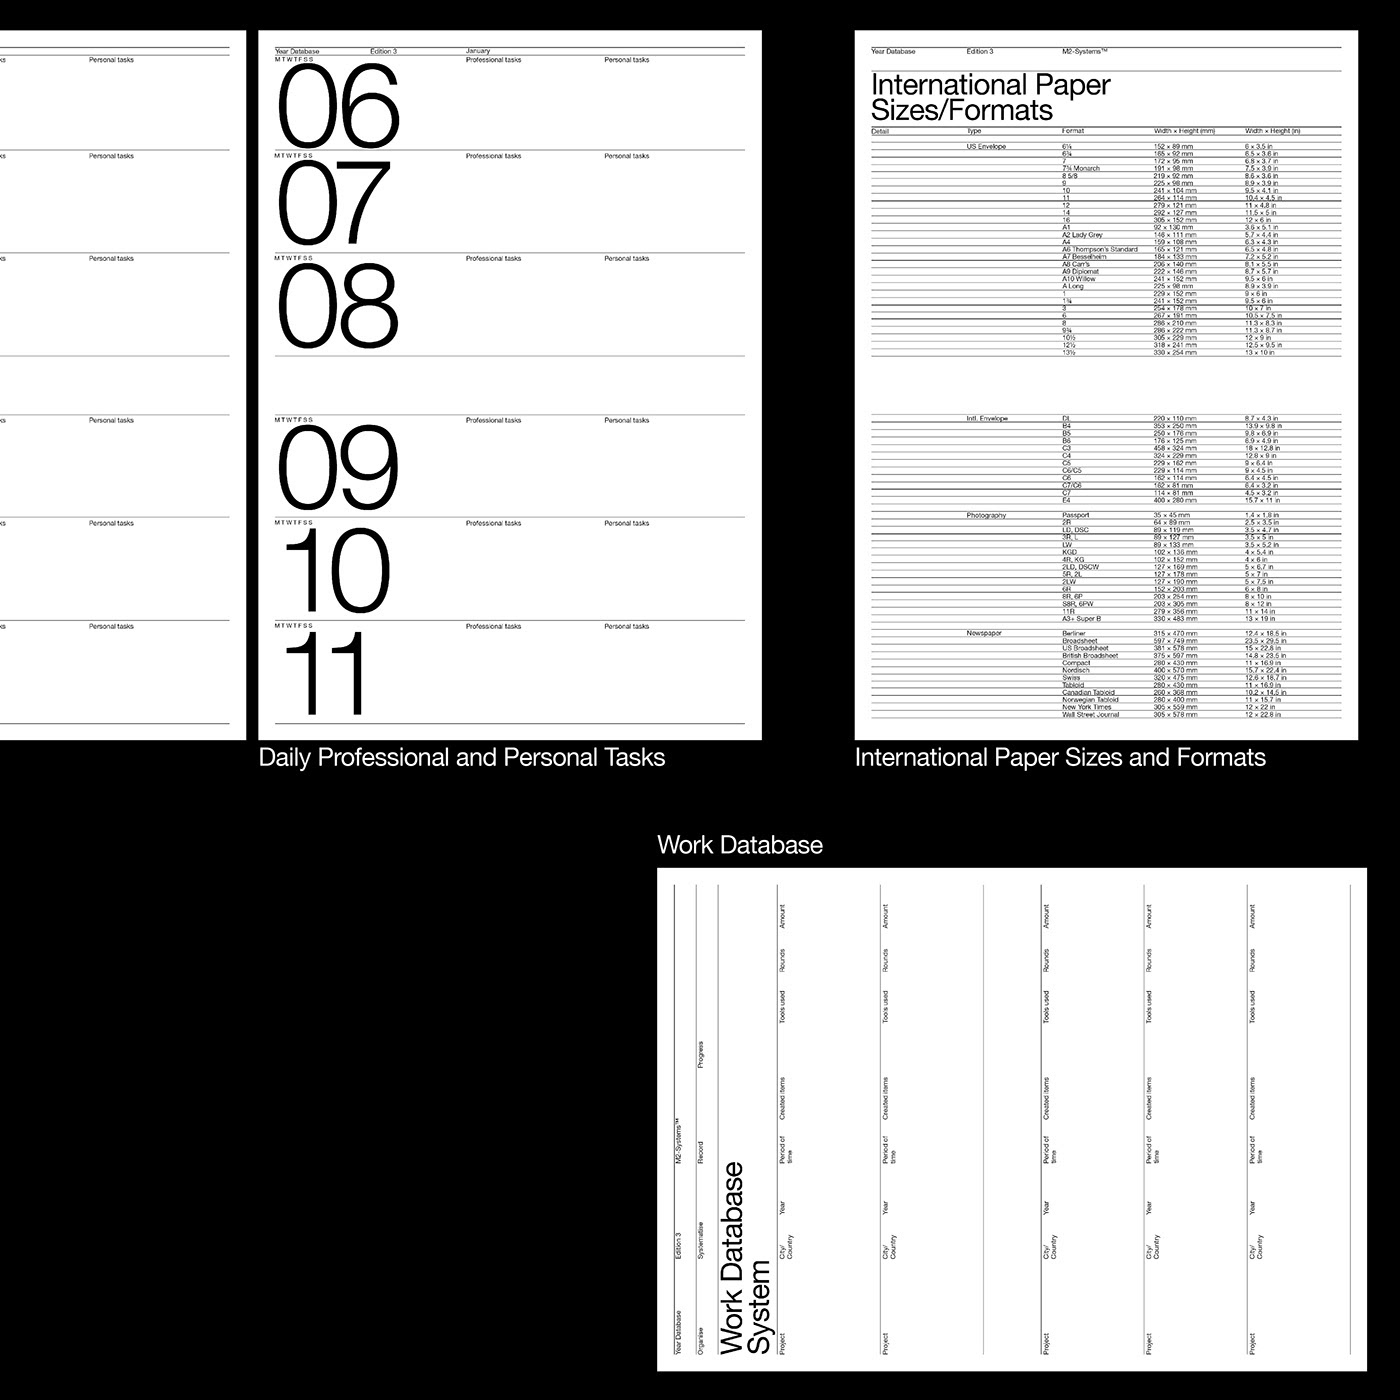 planner agenda print m2systems modernism helvetica typography   swiss modern Layout